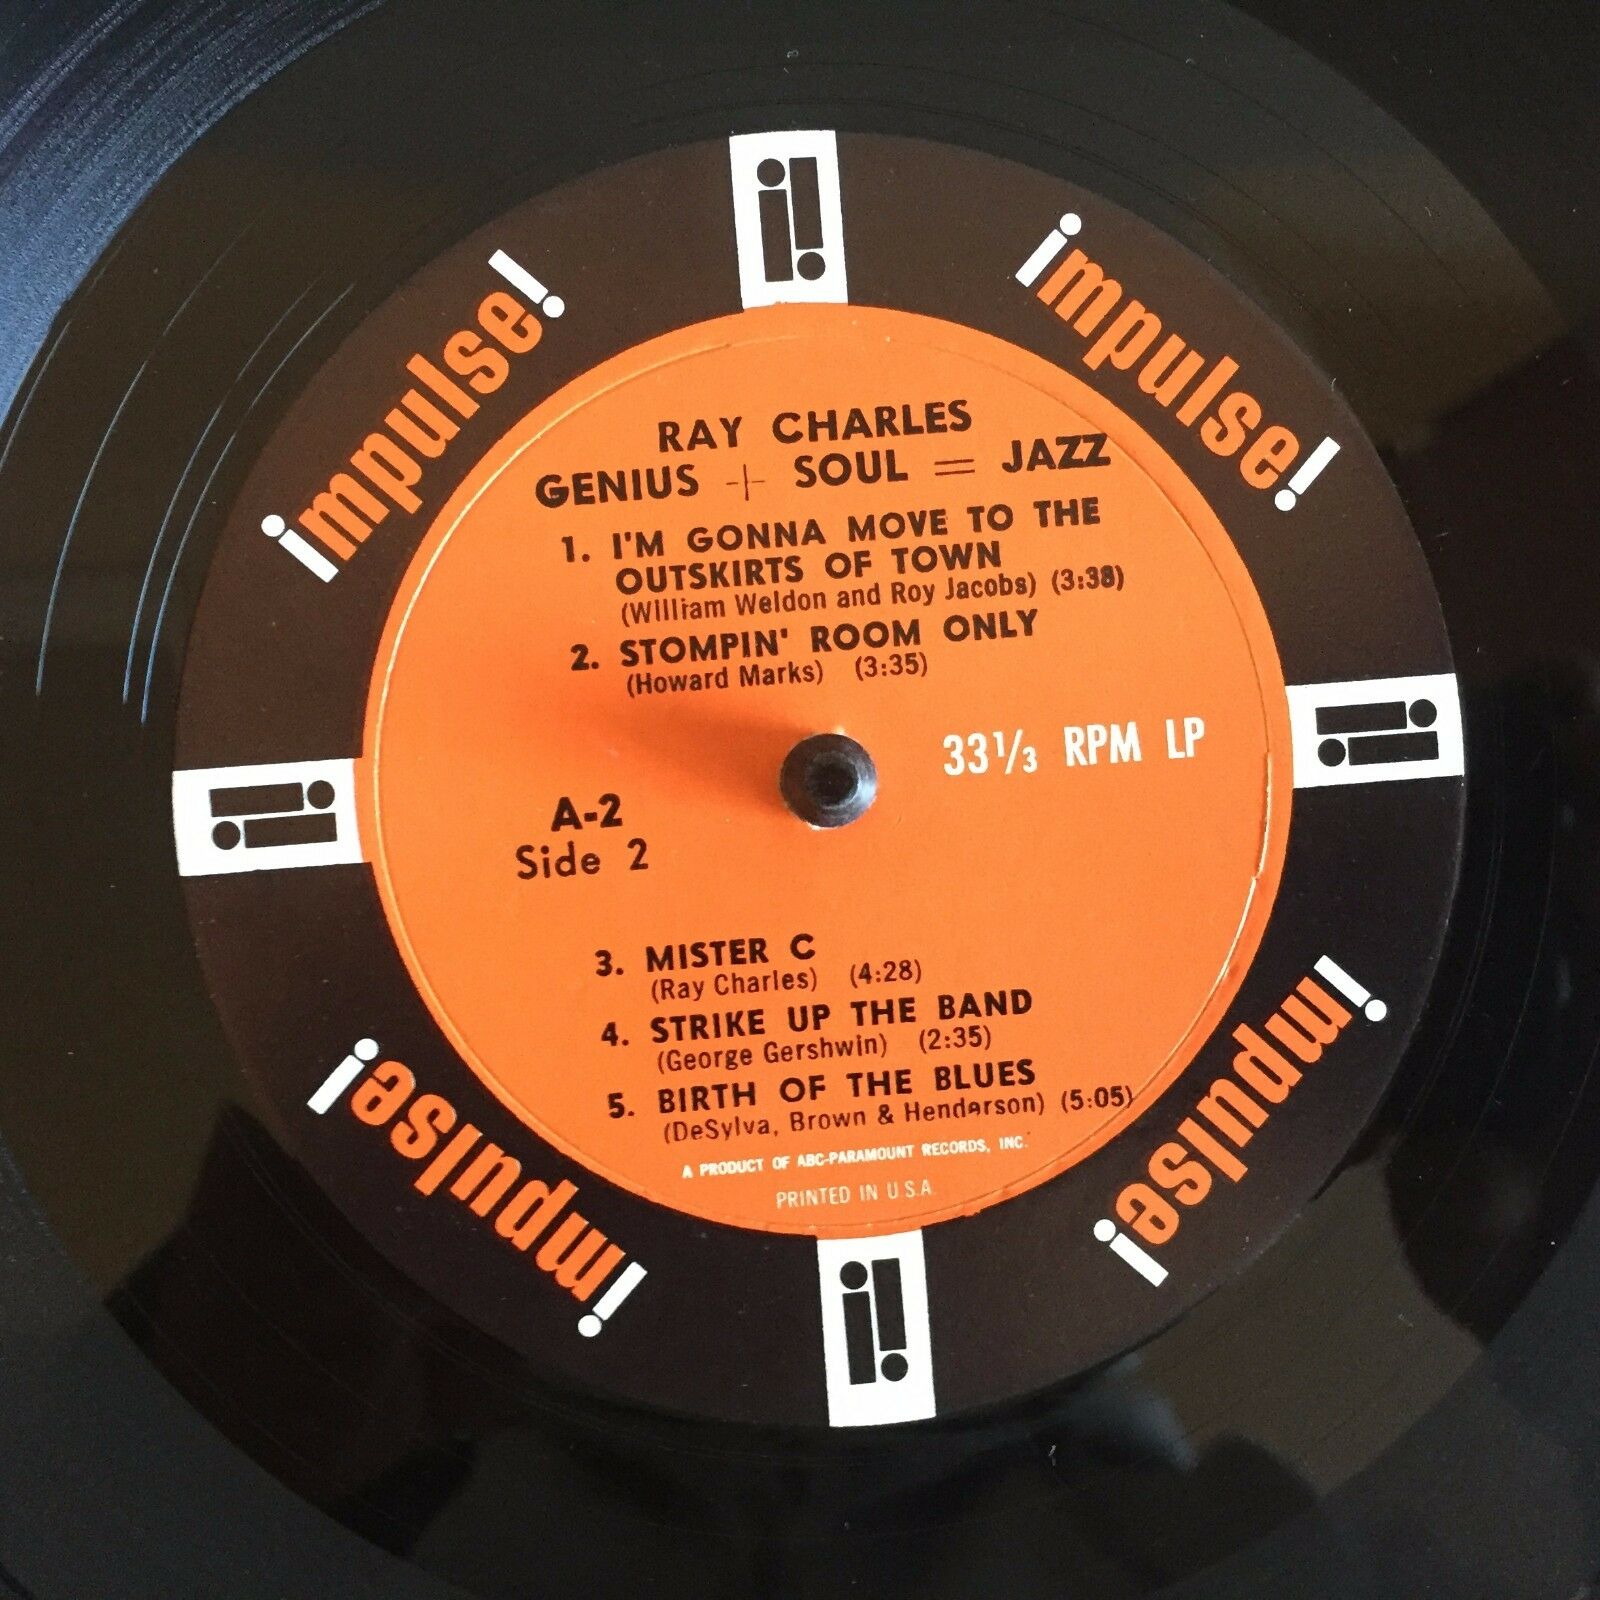 Pic 3 Genius+Soul=Jazz by Ray Charles 1961 Vinyl Impulse Records 1st Press Mono